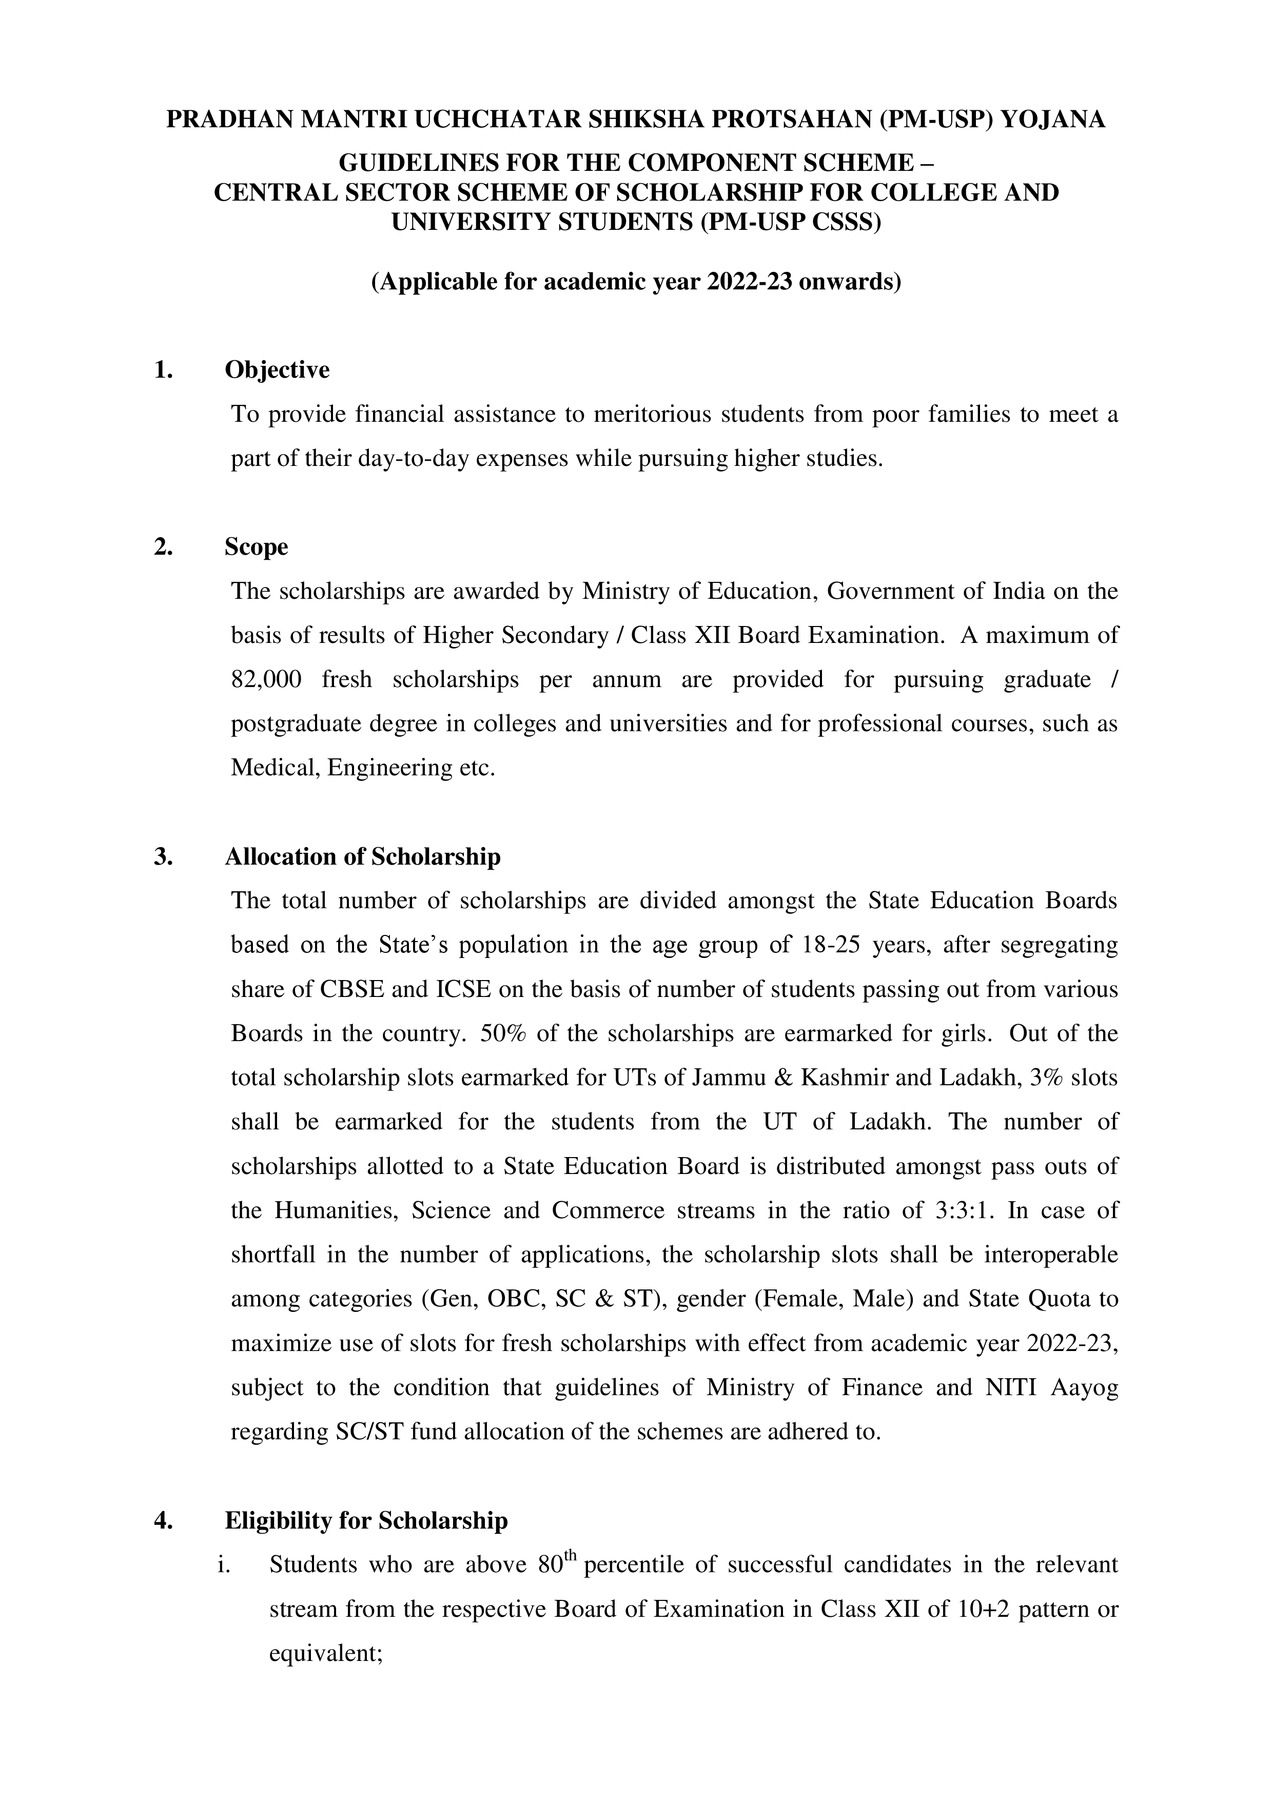 PM USP Yojana 2023 Guidelines PDF